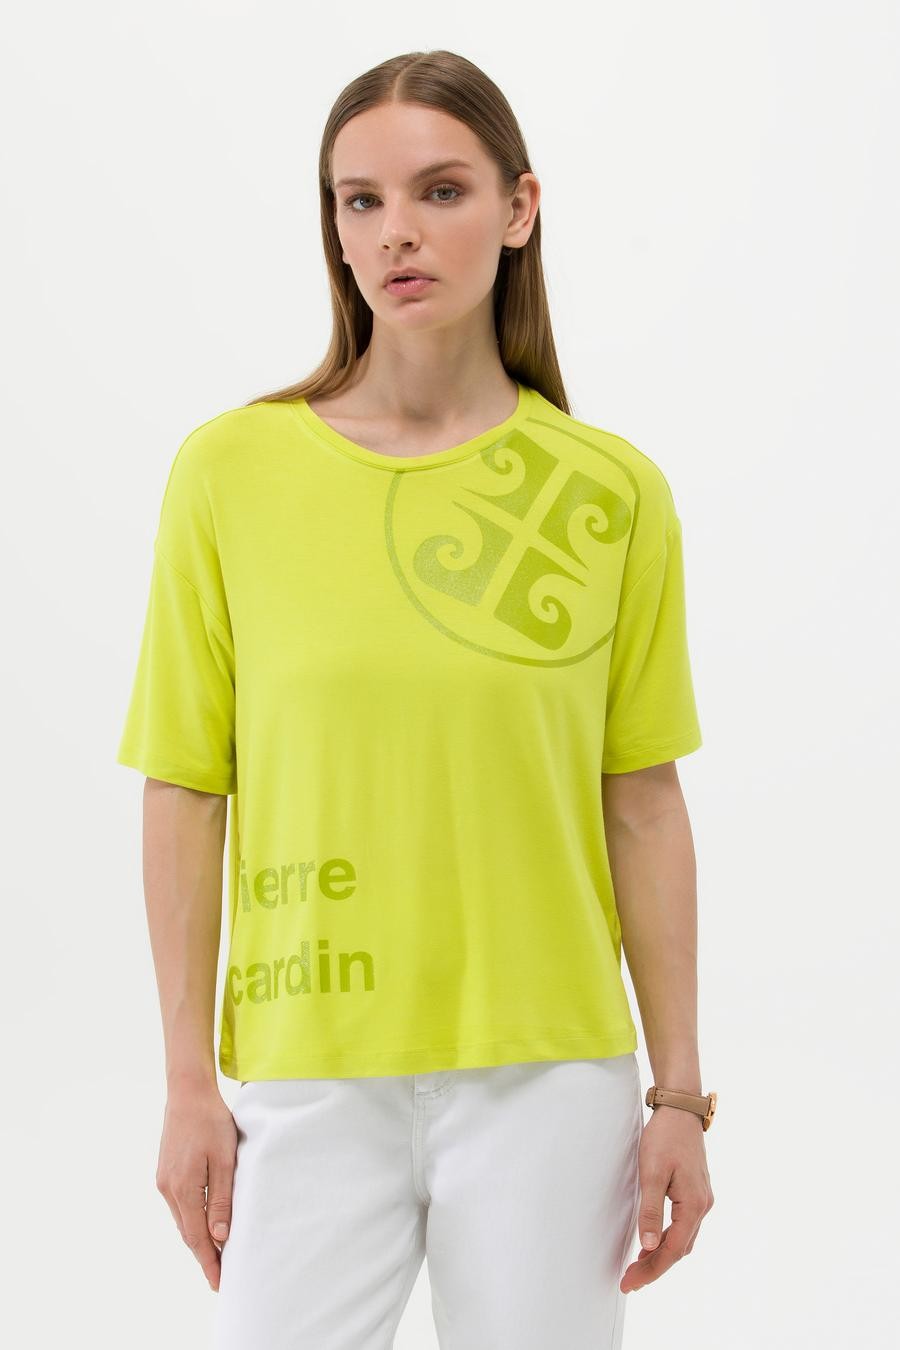 Yeşil Comfort Fit Tişört